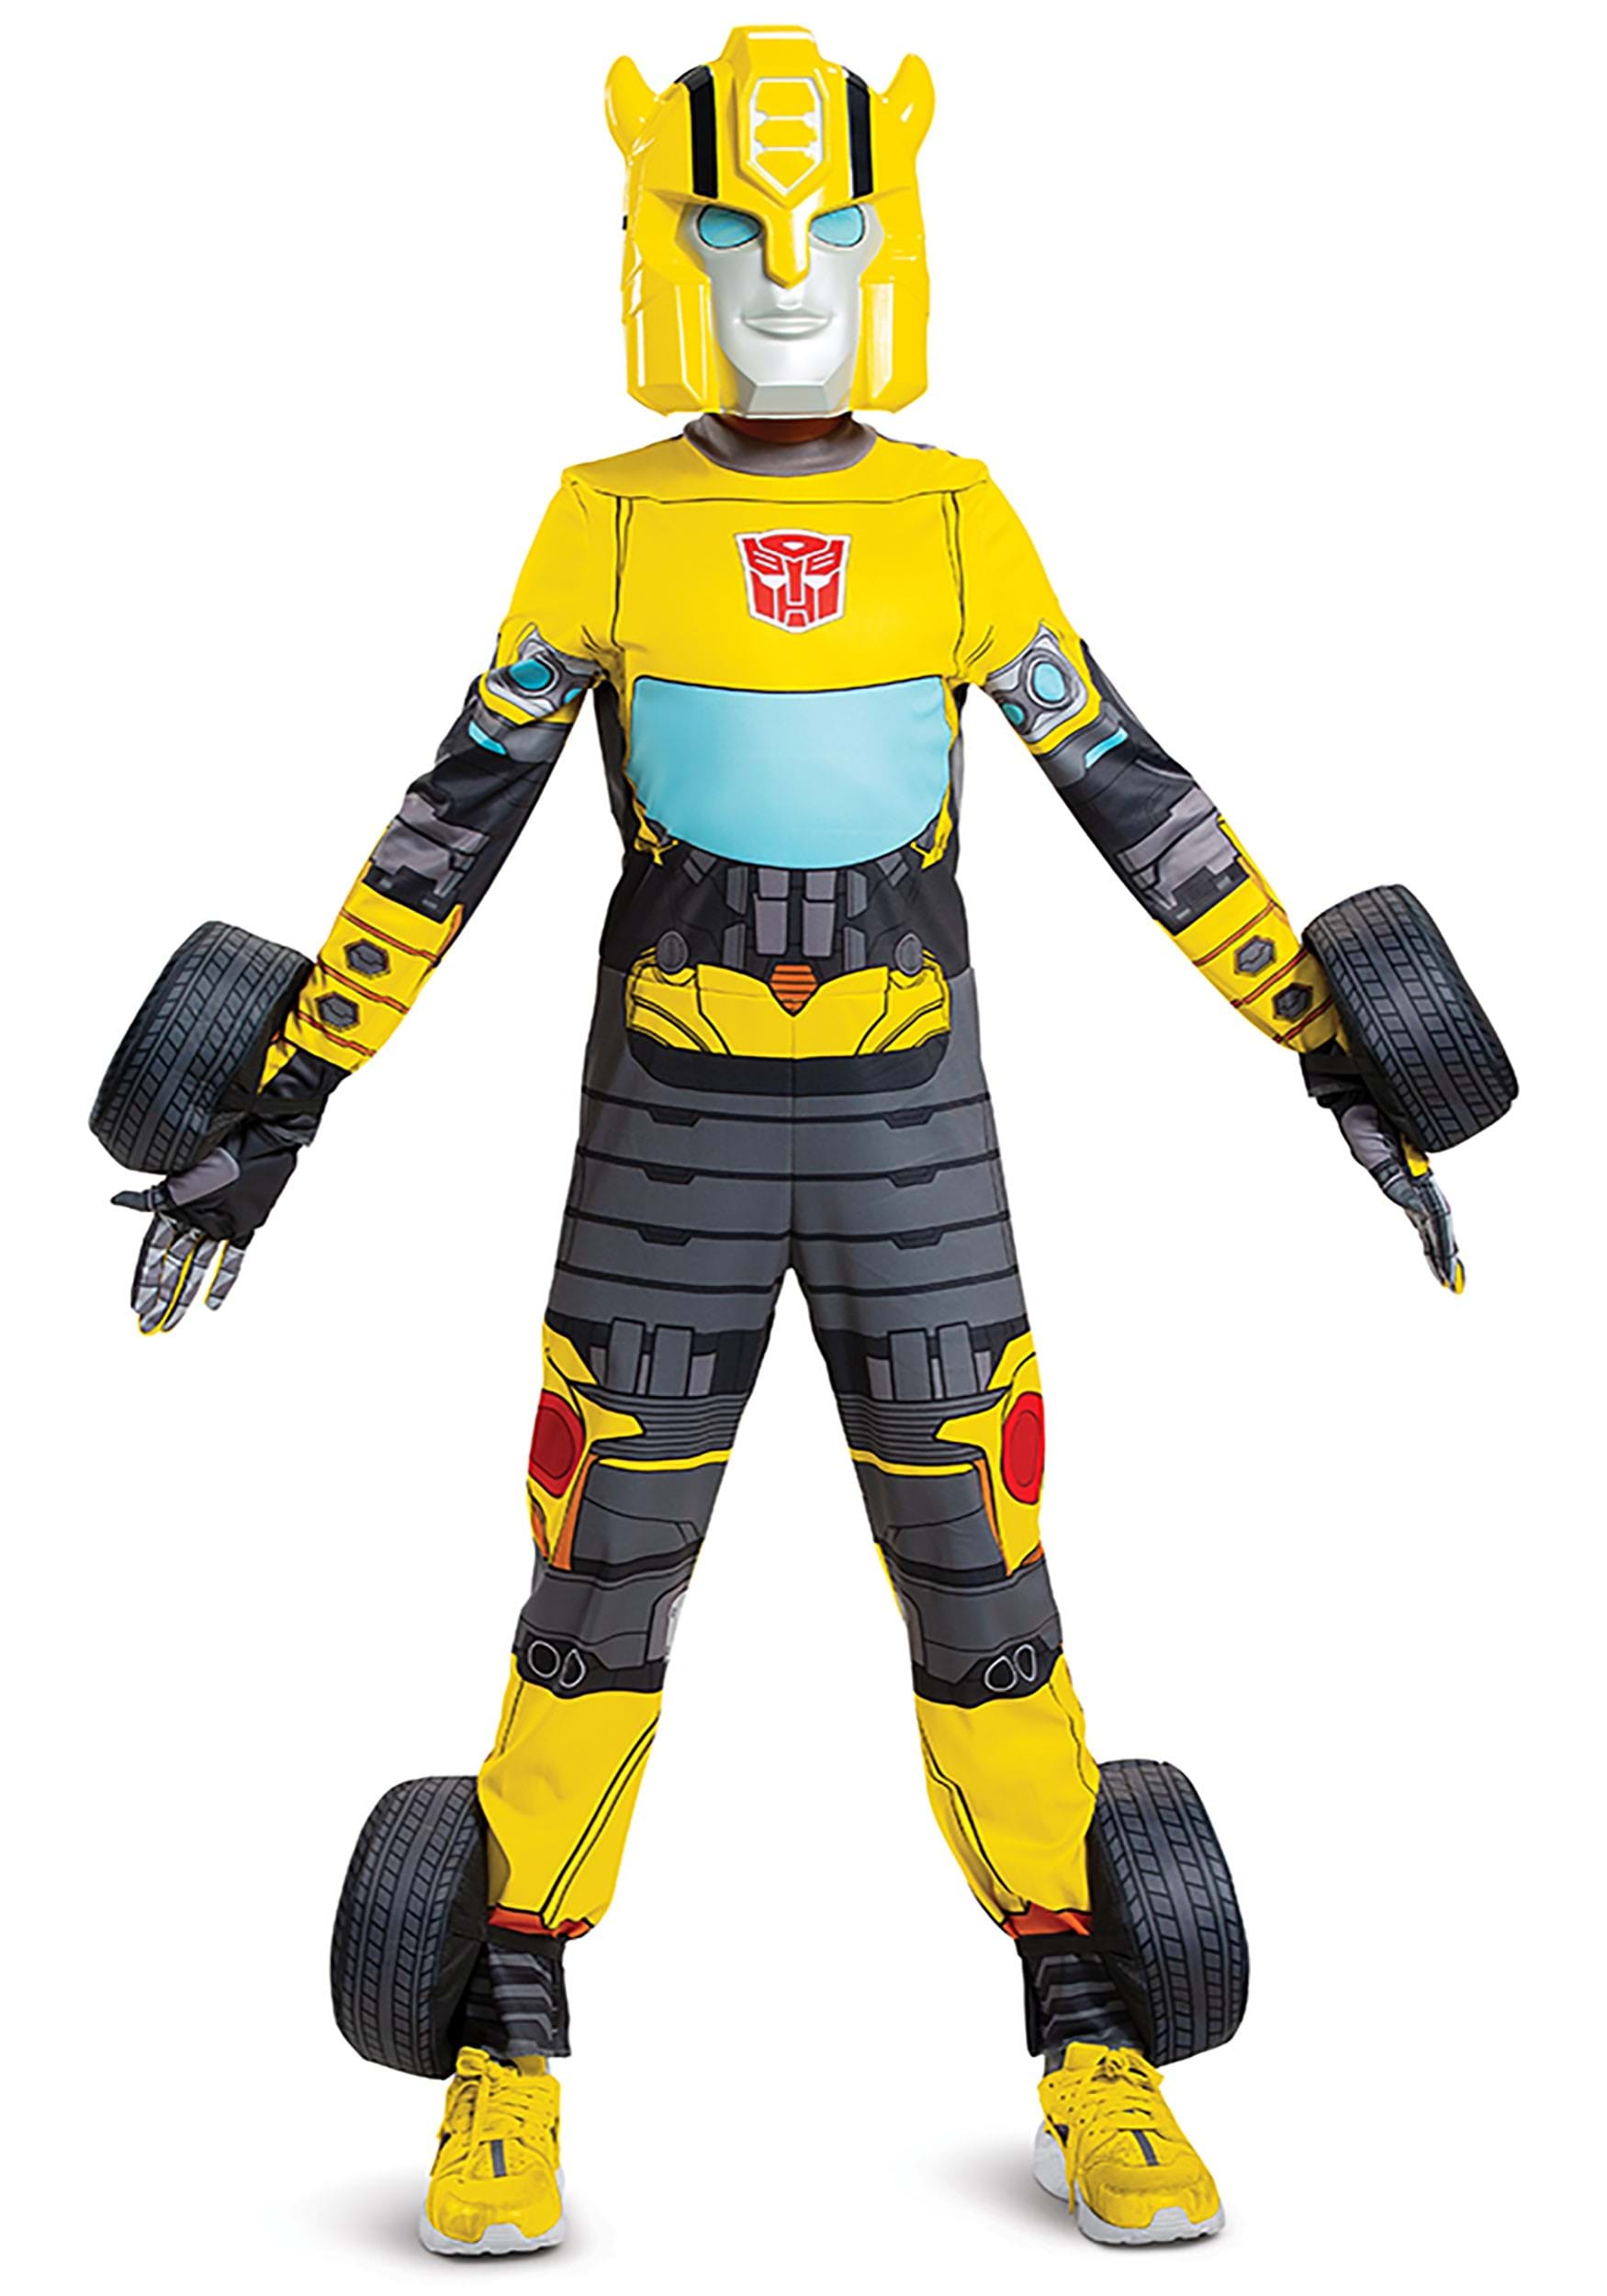 Bumblebee Transformers costume NEW NEVER WORN Size Medium 8-10 